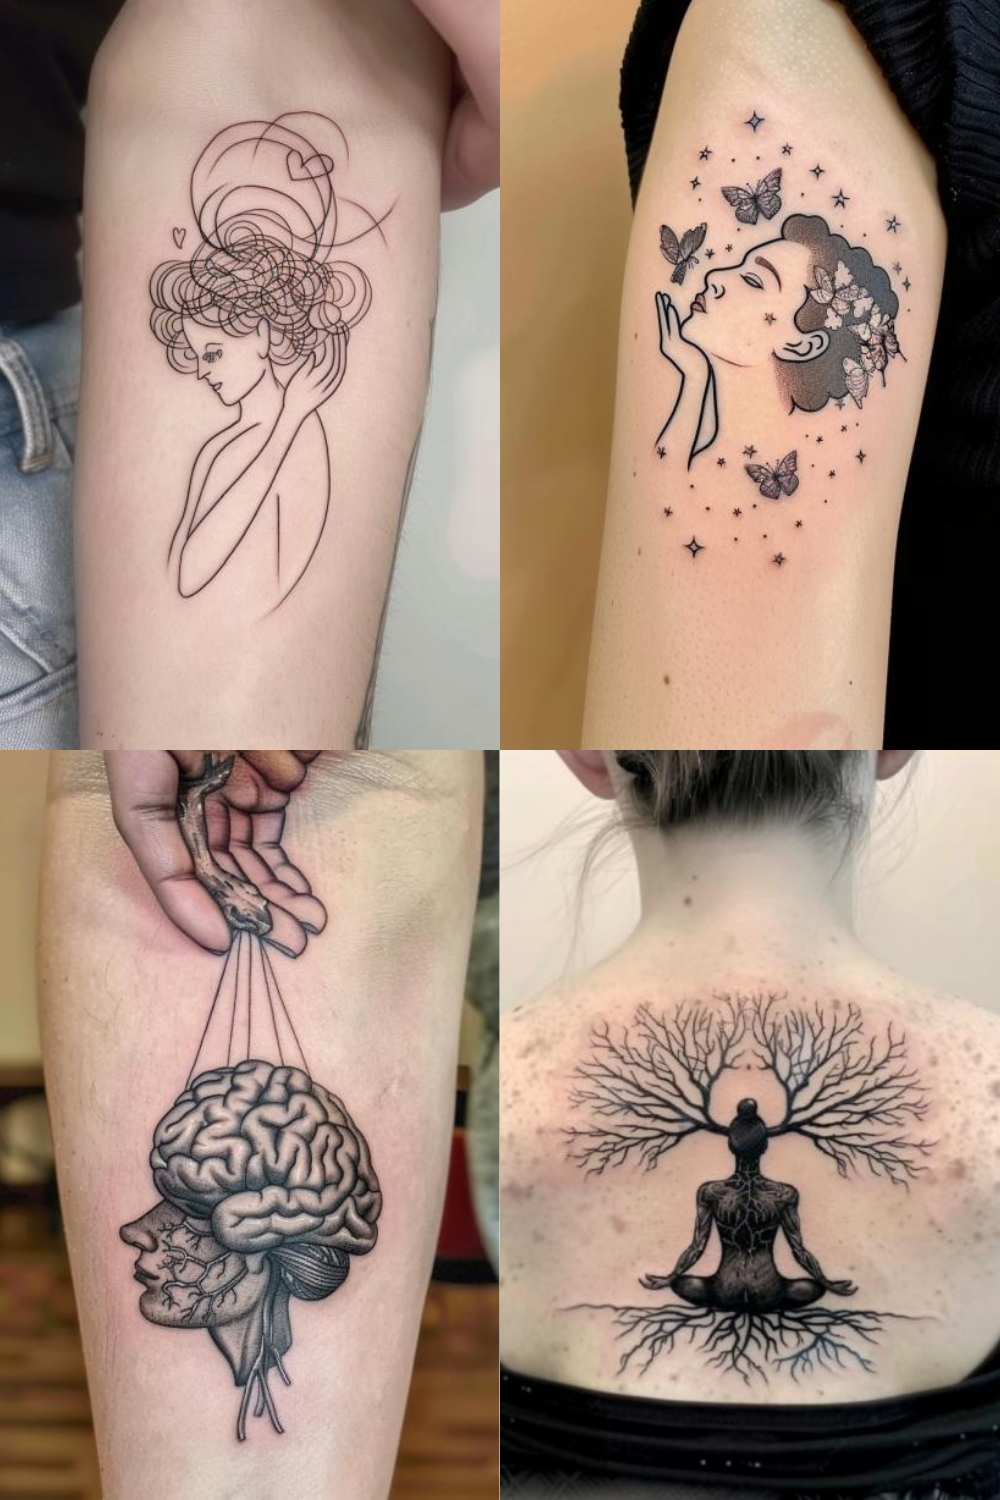 mental health tattoos